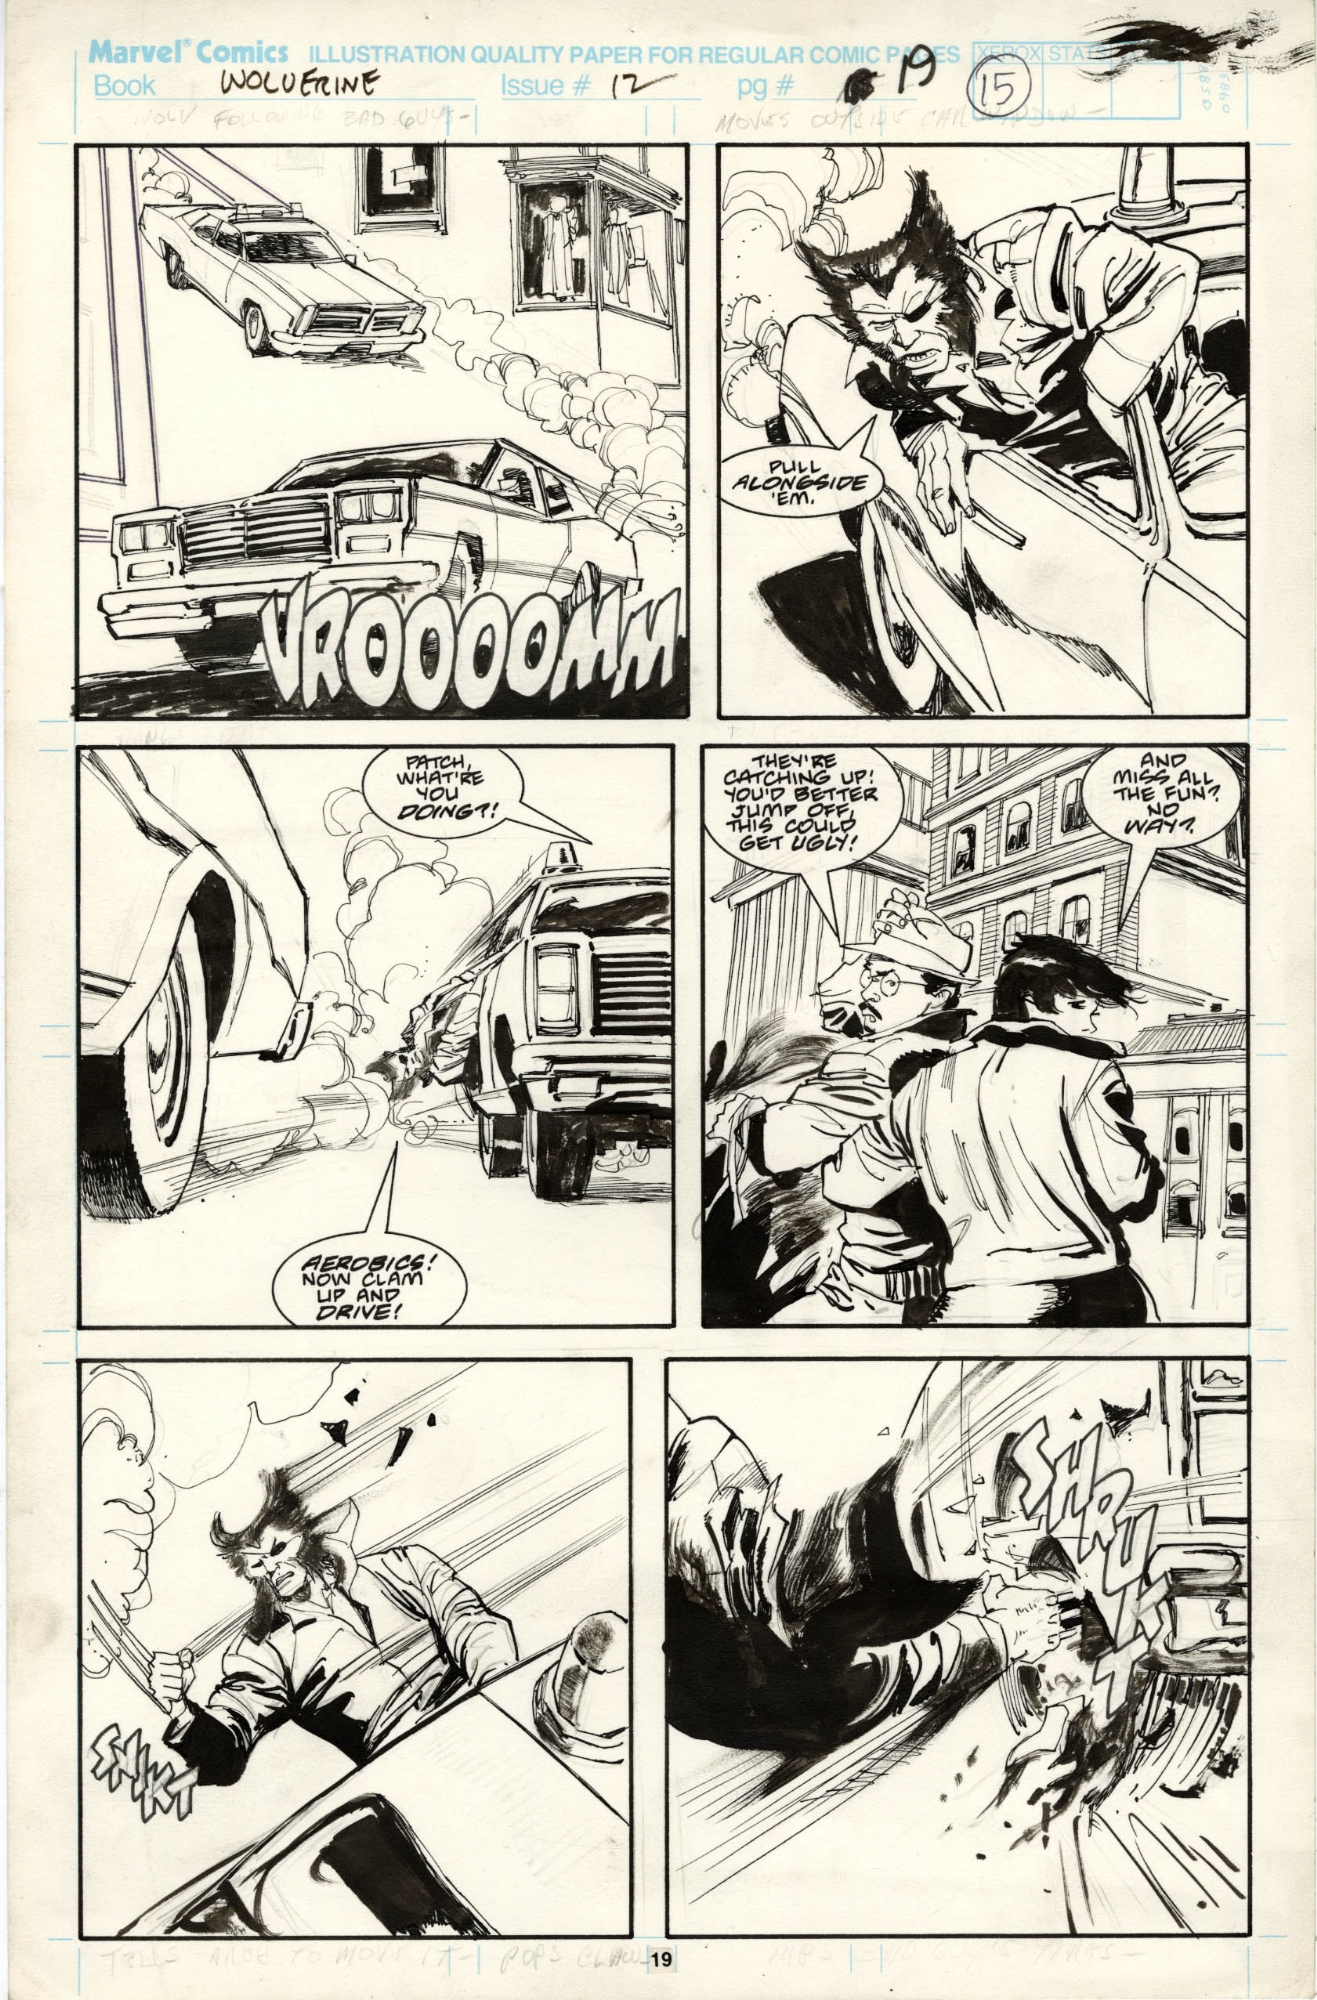 Wolverine # 12 John Busceman / Bill Sienkiewicz USA, 1989 